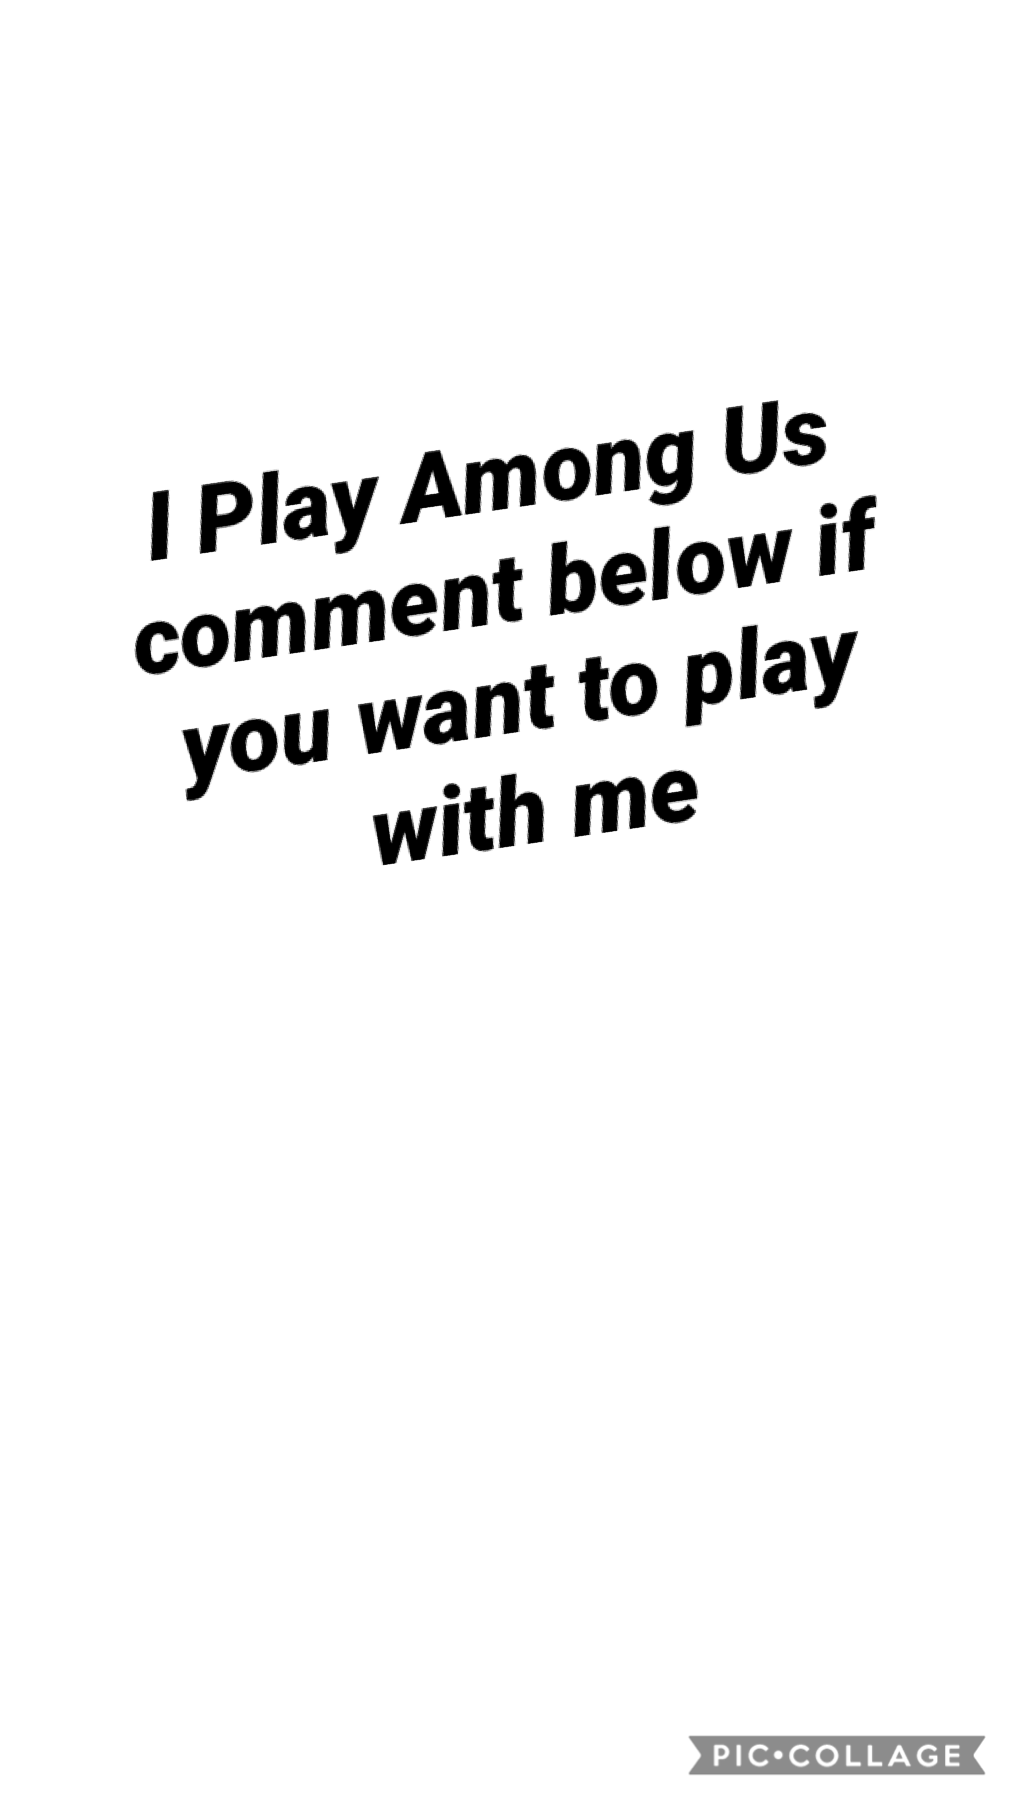 Follow me so we can play among us